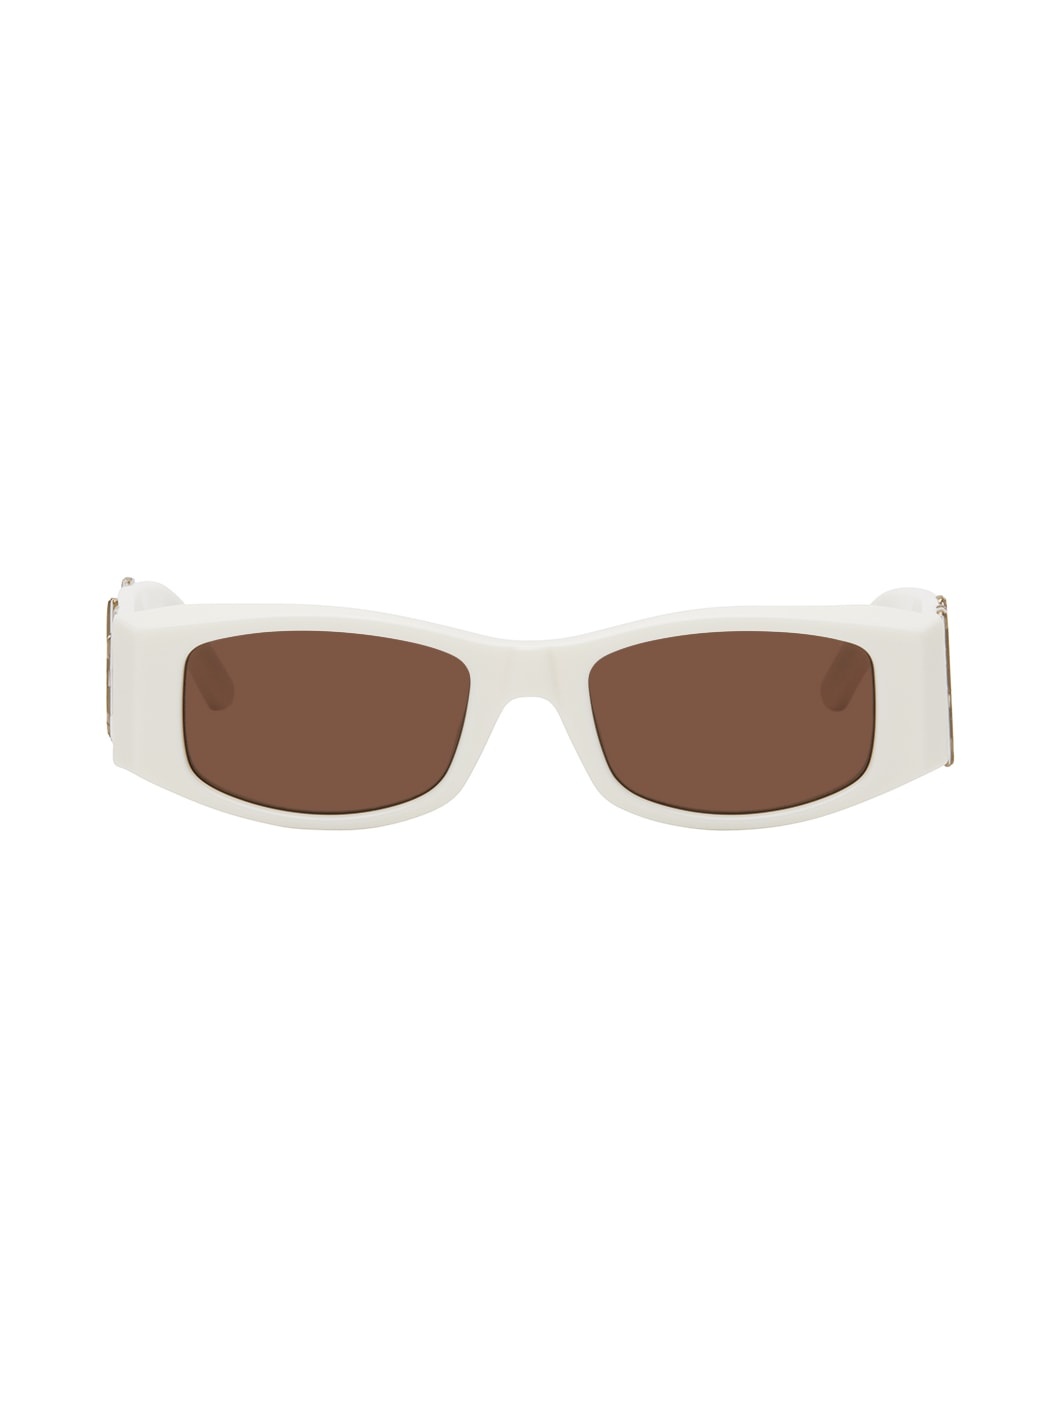 White Angel Sunglasses - 1